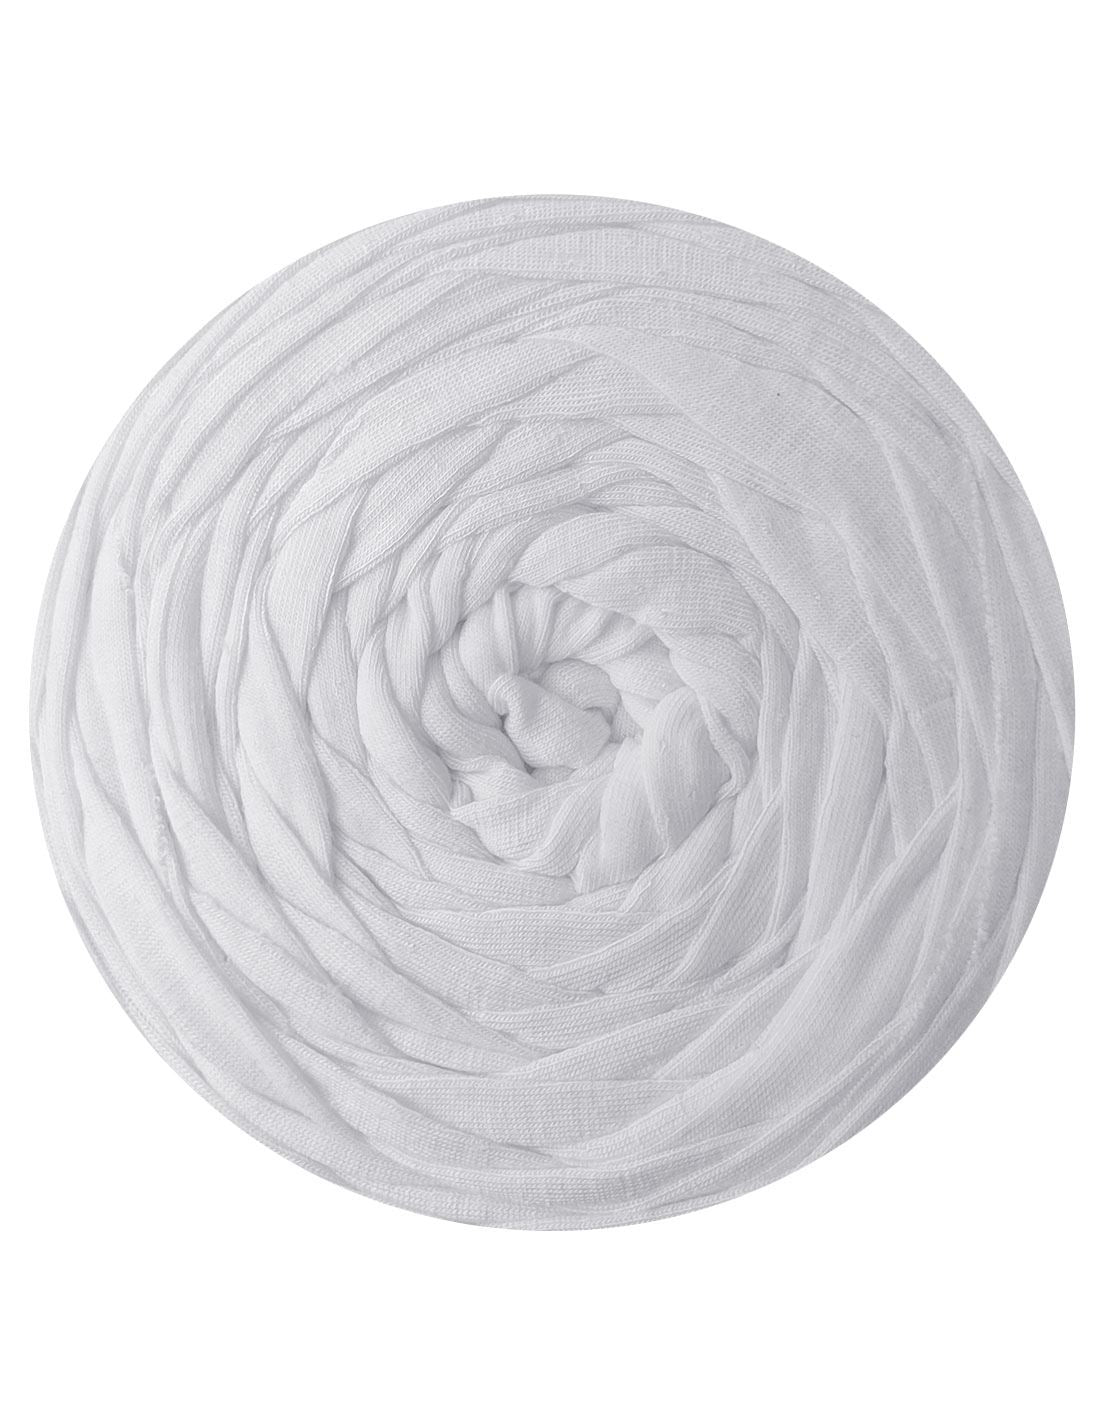 Off white t-shirt yarn (100-120m)